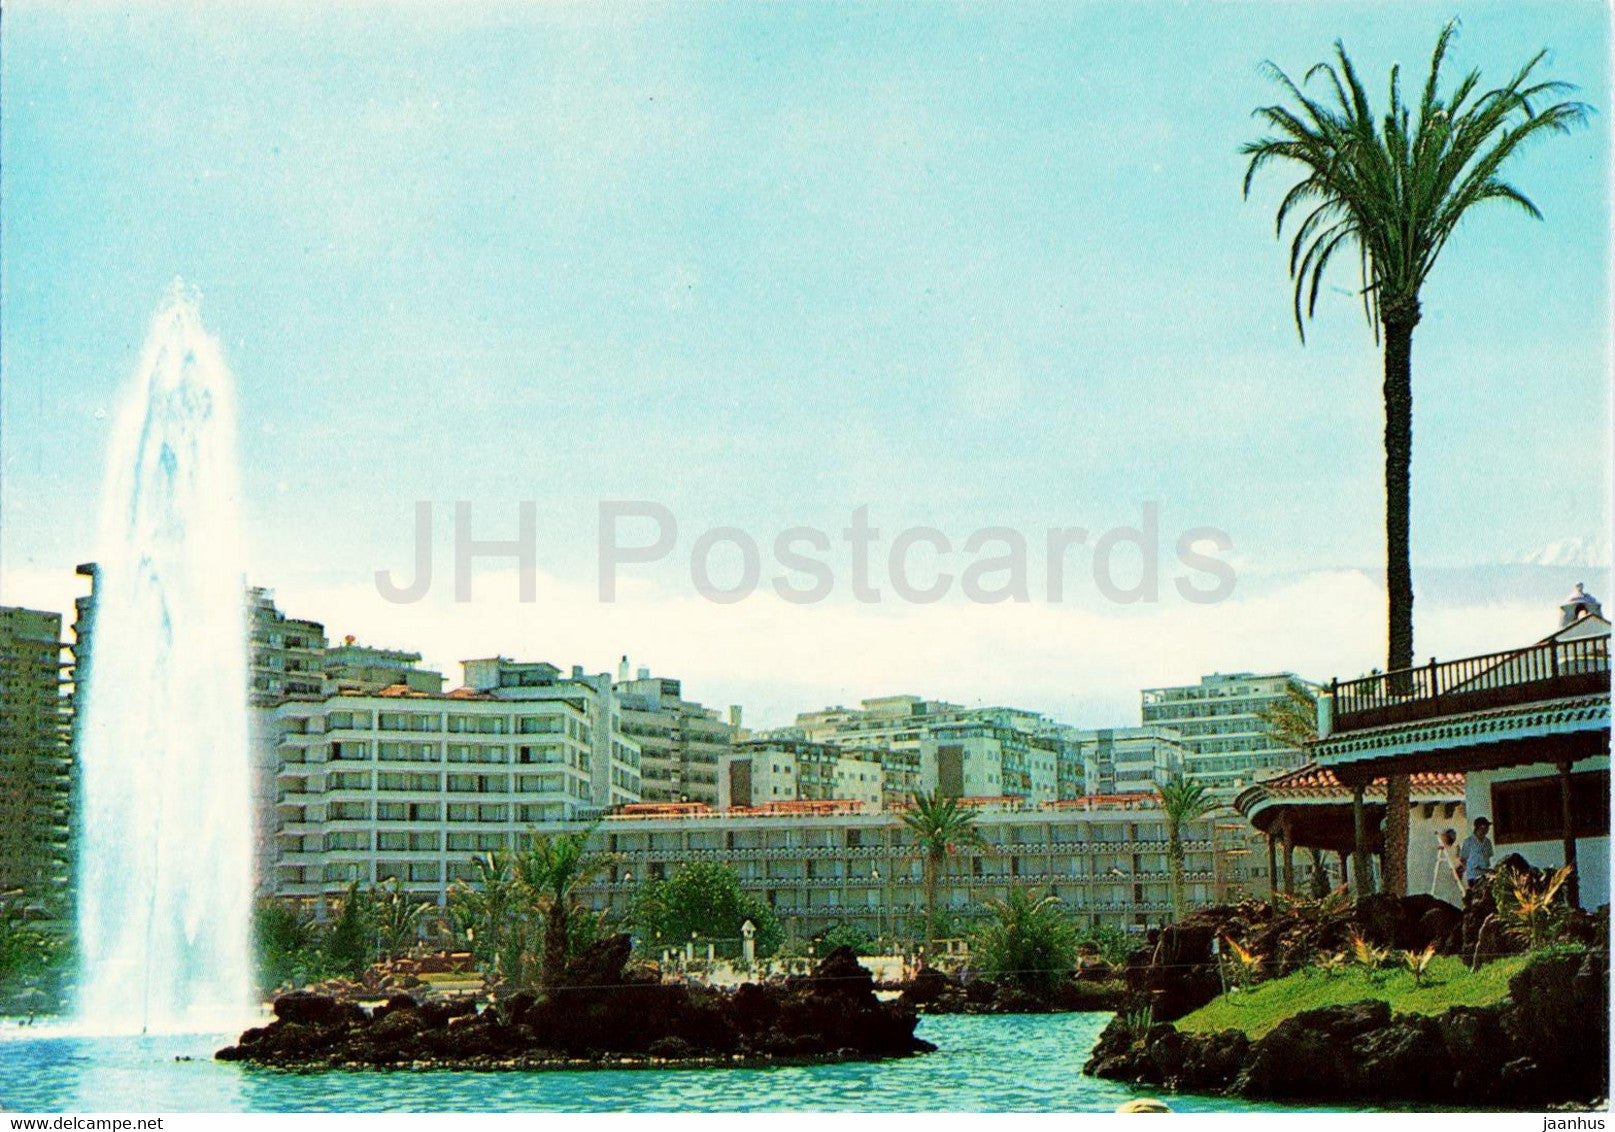 Puerto de la Cruz - Gran Hotel Tenerife Playa - Tenerife - 1002 - Spain - unused - JH Postcards